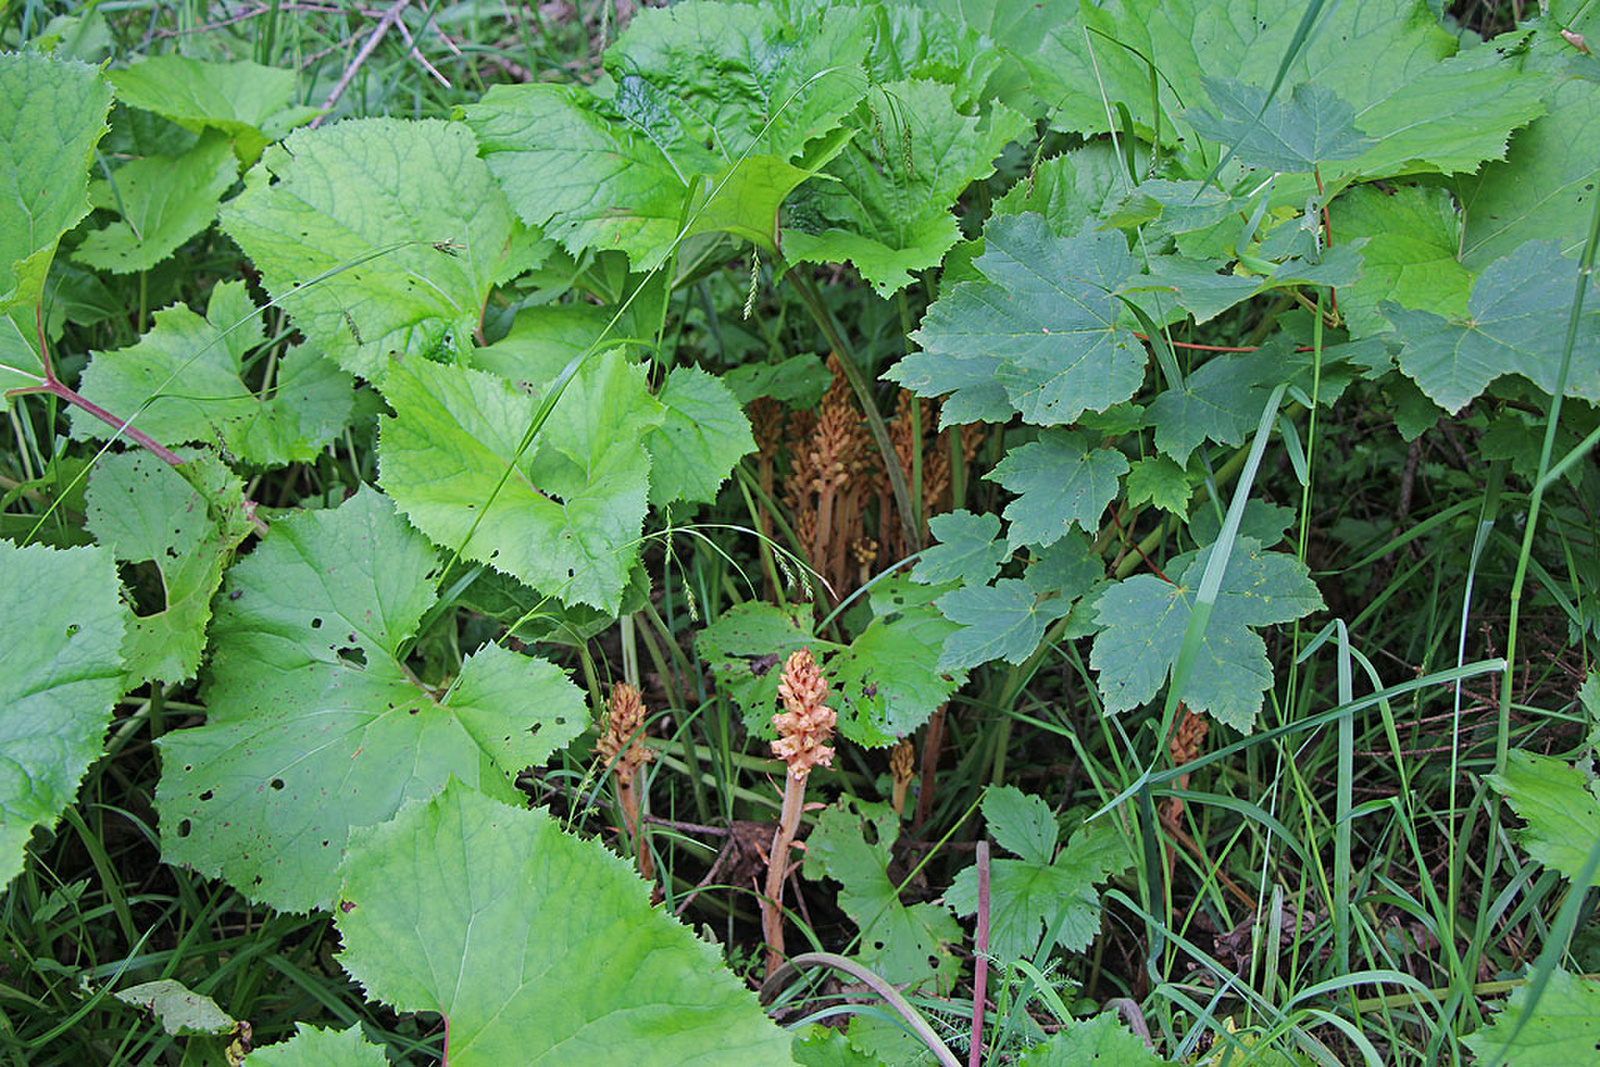 Orobanche flava - martilapu vajvirág